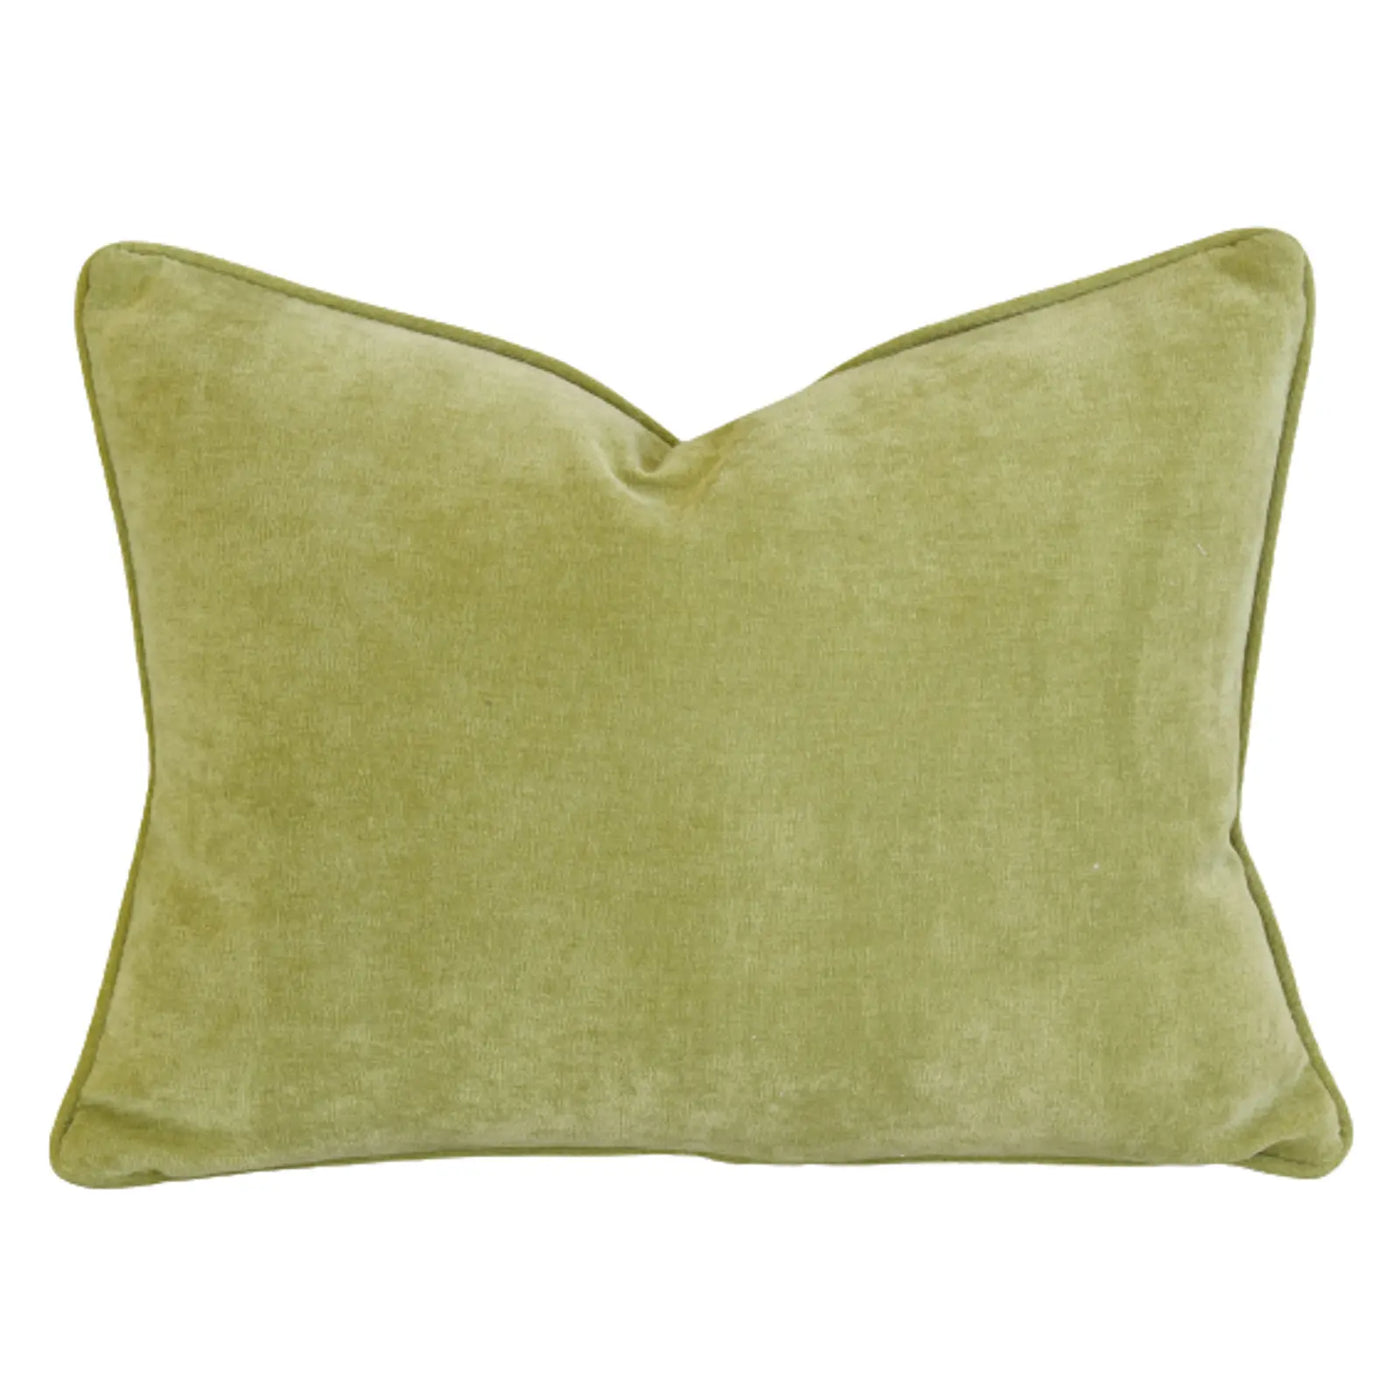 Custom Floral Botanical Pillows